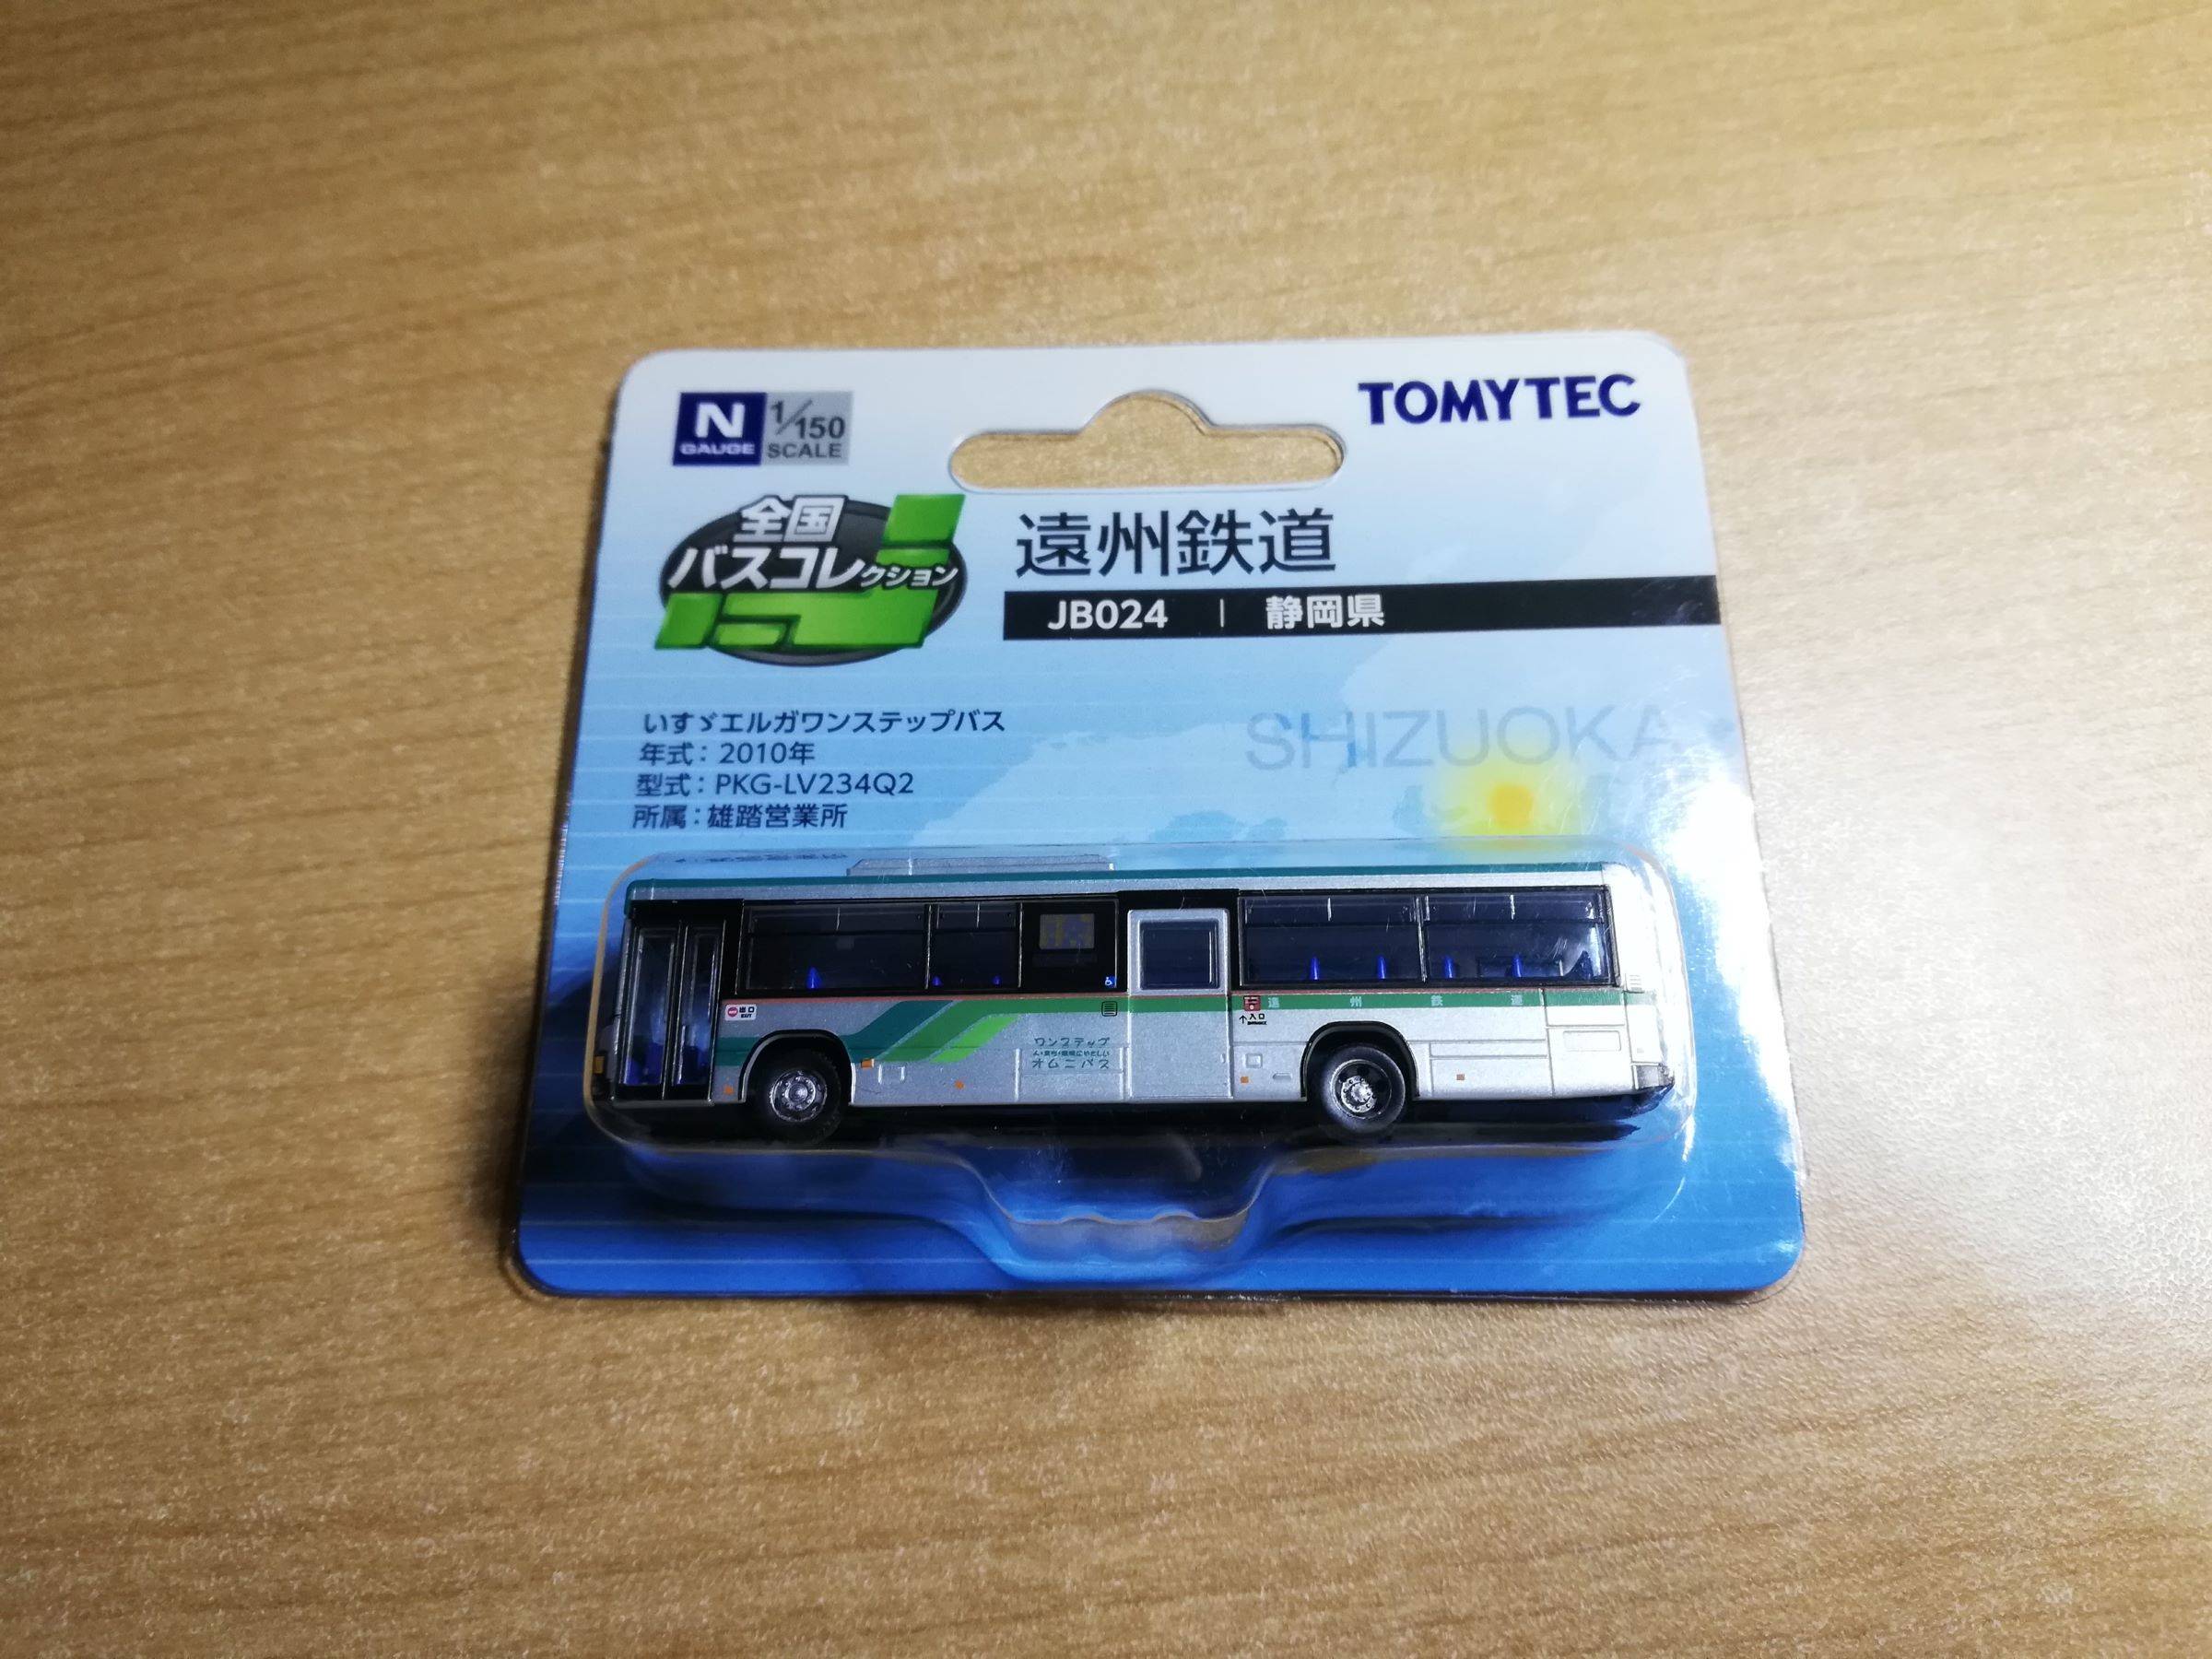 Tomytec N Scale Komono 122 Bus Stop C 1/150 213 for sale online 